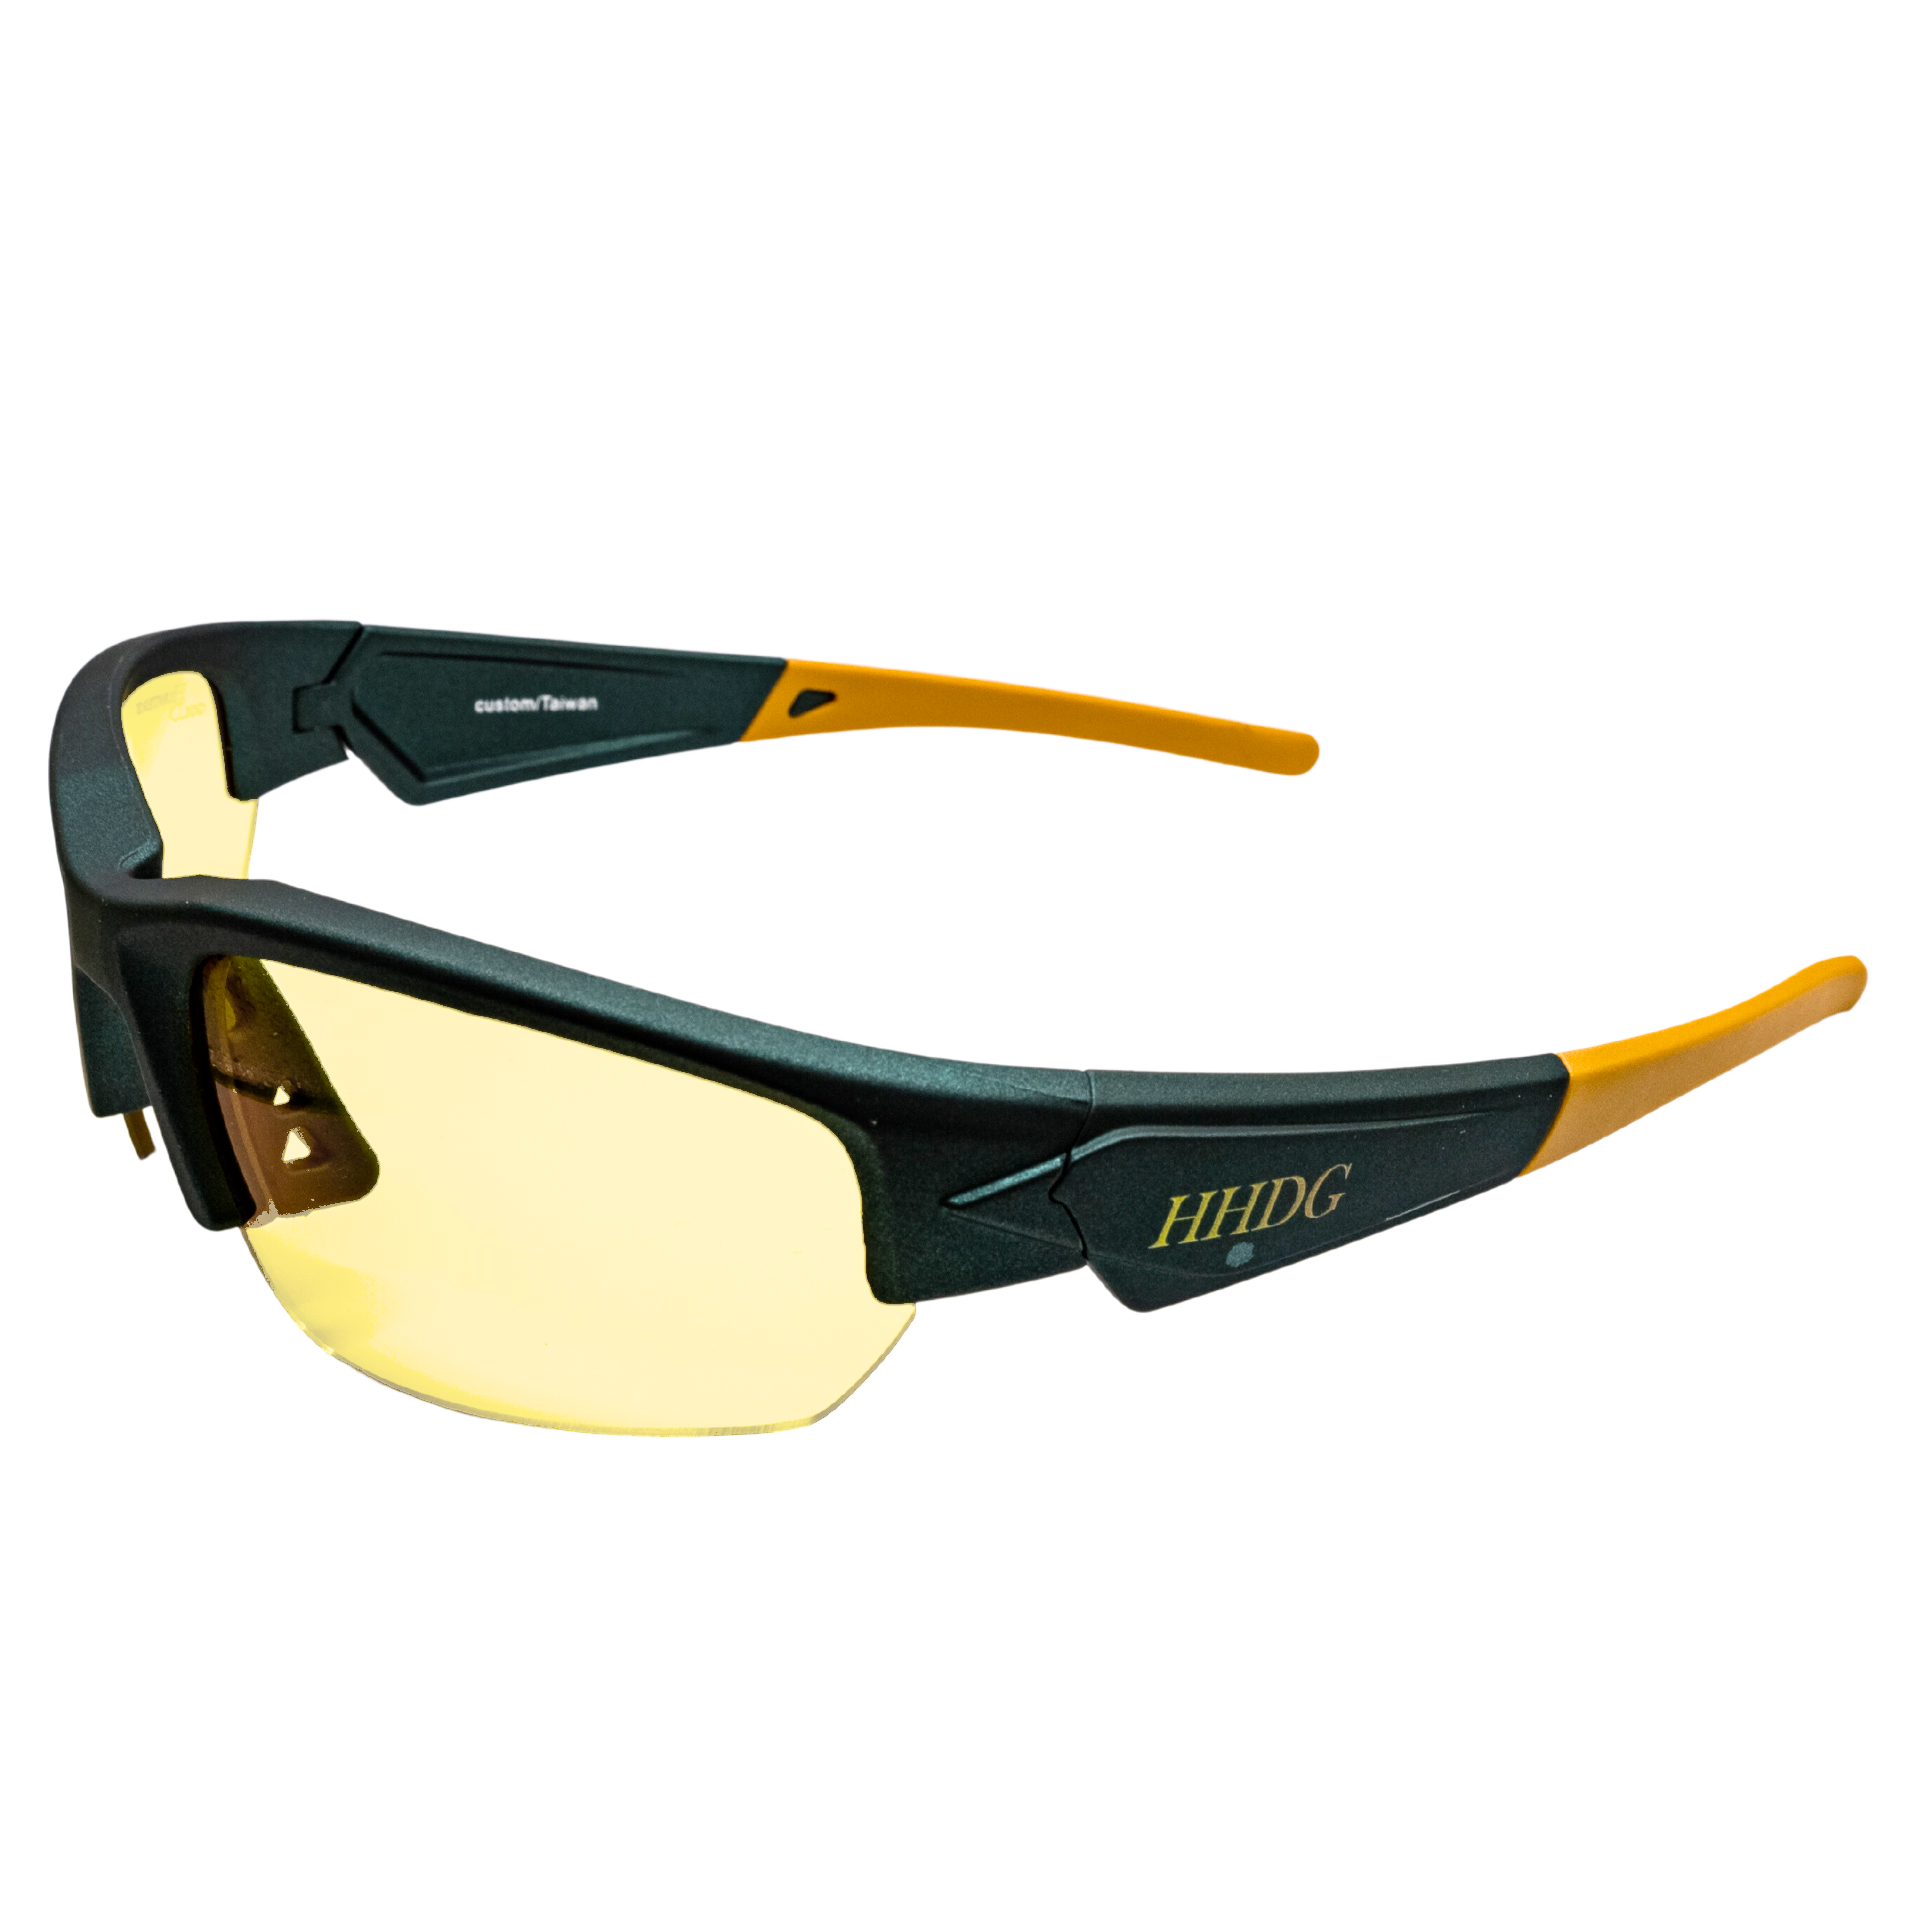 Hunters HD Gold - Premium Glasses and Lenses